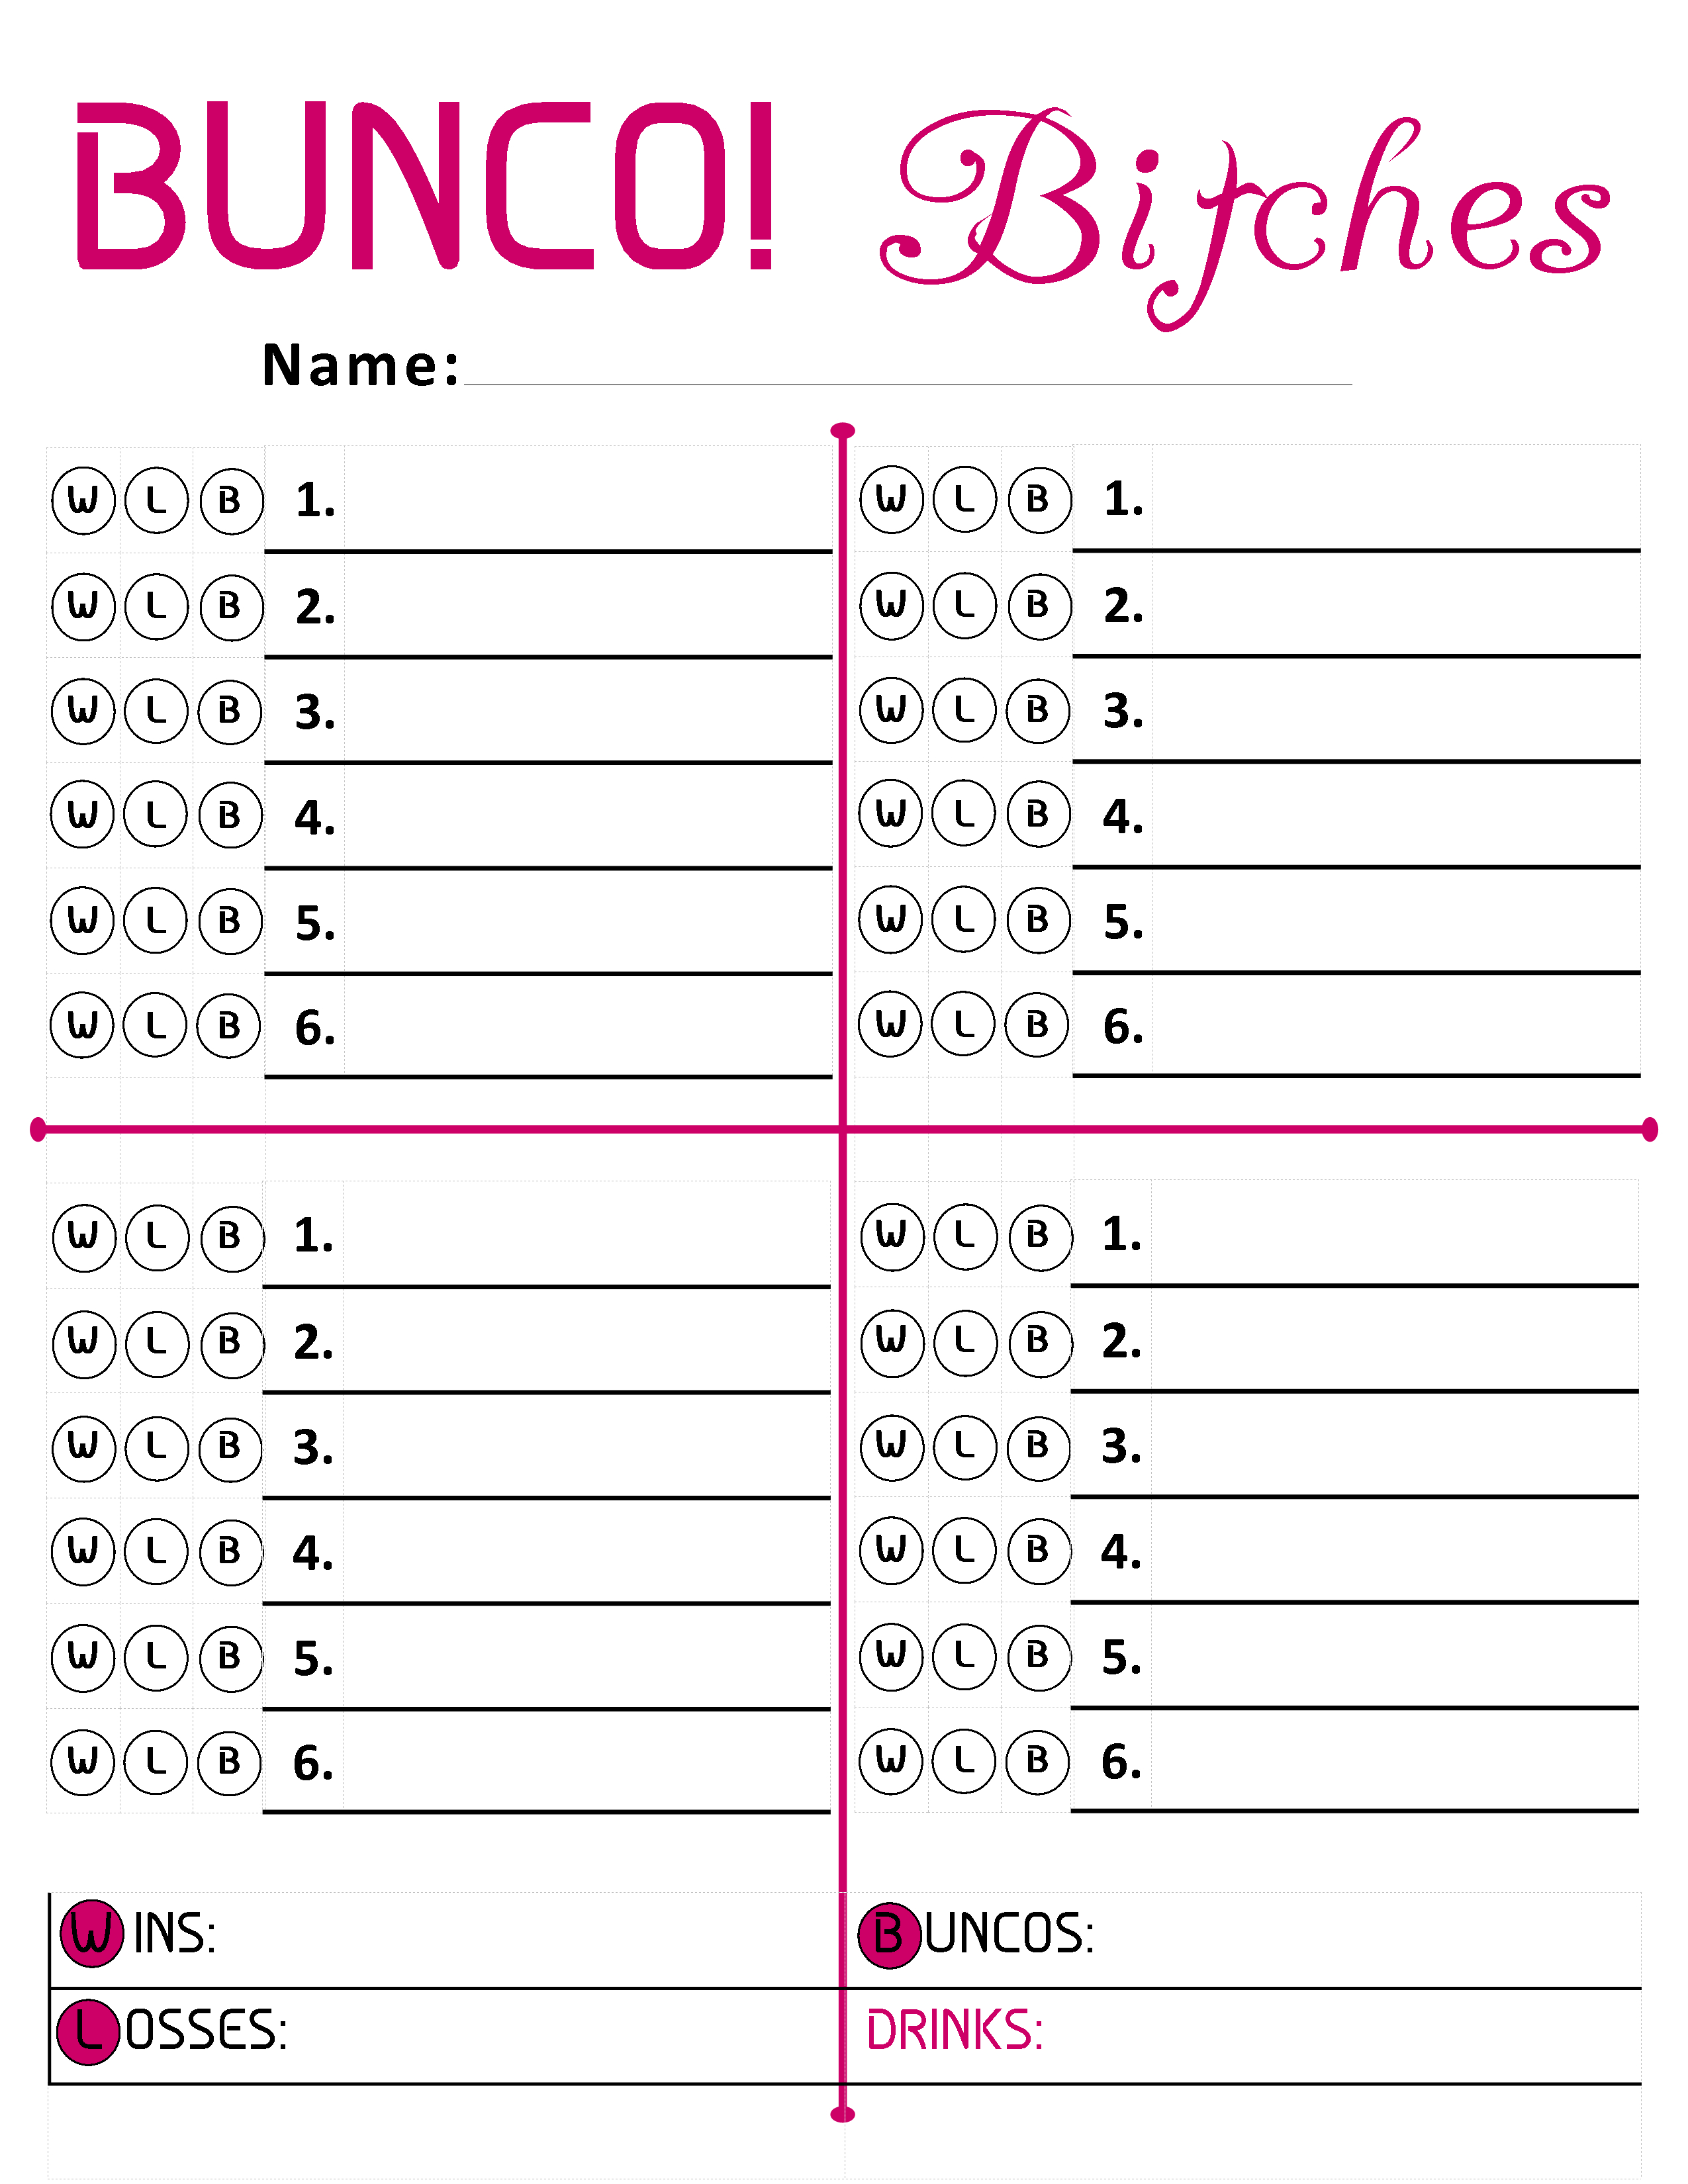 Pinangelica Murdock-Maraj On Bunco Night | Bunco Score Sheets - Free Printable Bunco Score Sheets